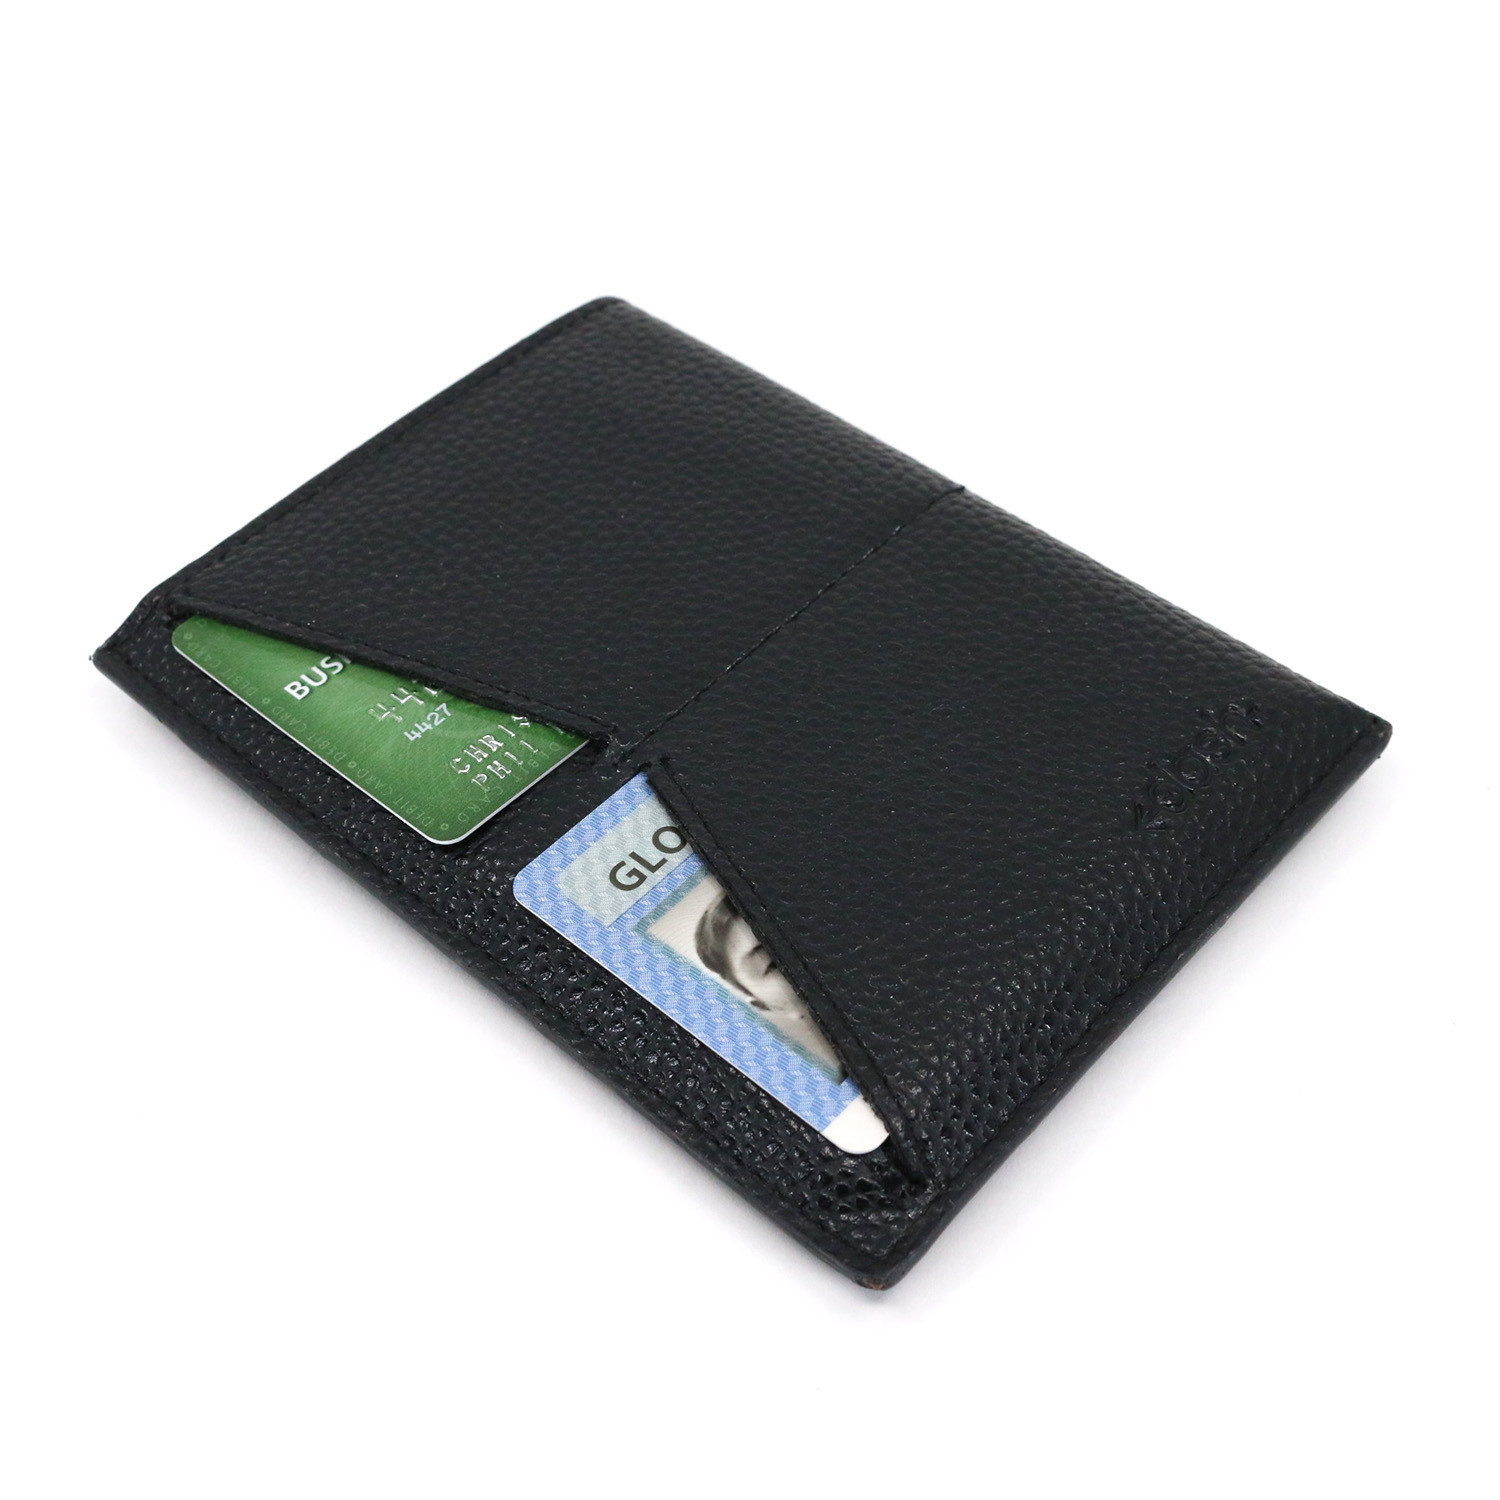 Dash wallet uk вывести биткоин на карту без комиссии cashout